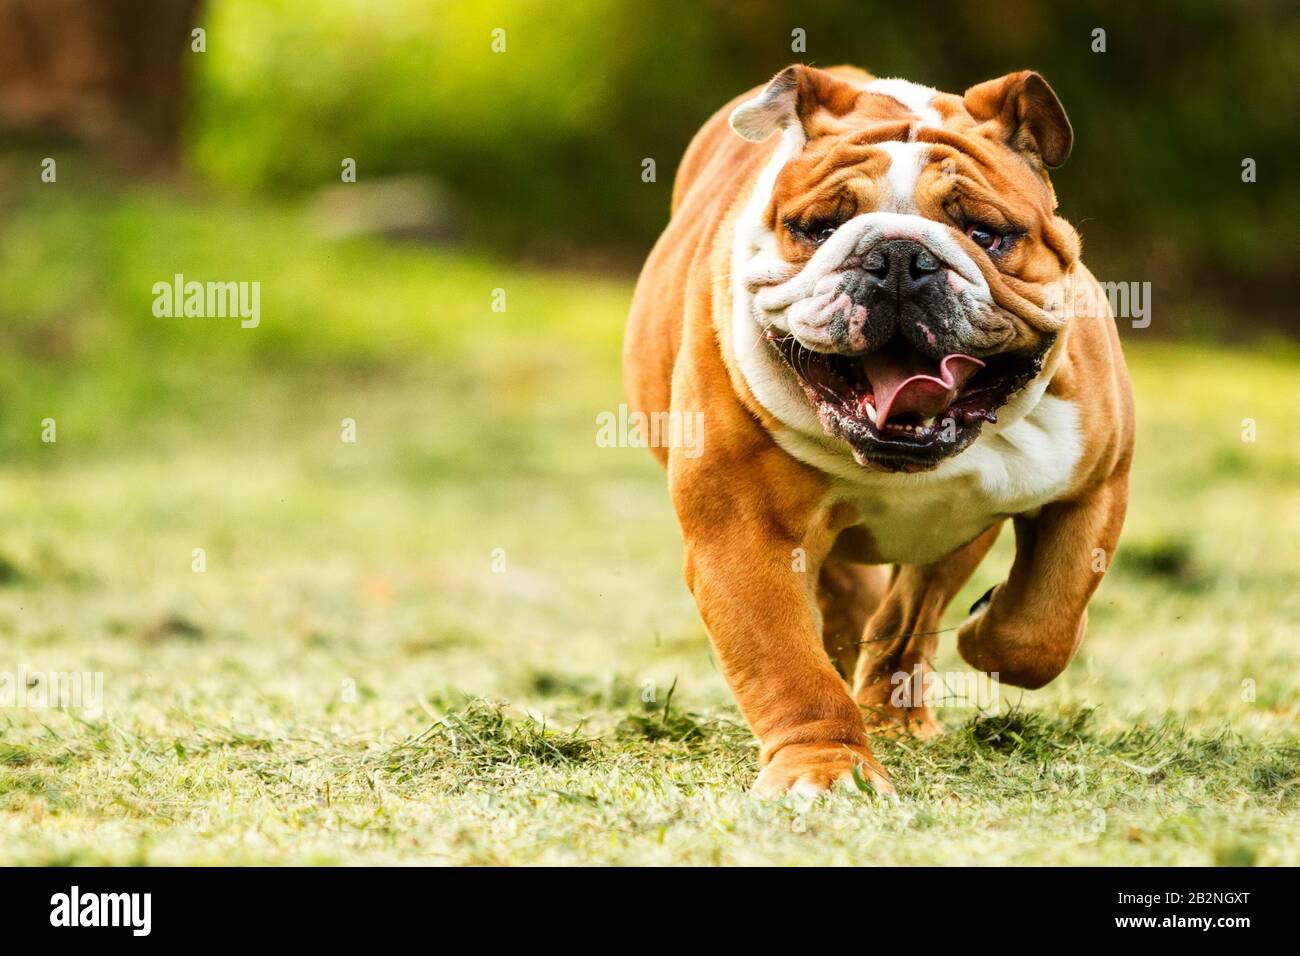 Thoroughbred English Bulldog Moving Toward The Slr Wrinkled Face Close Up Stock Photo